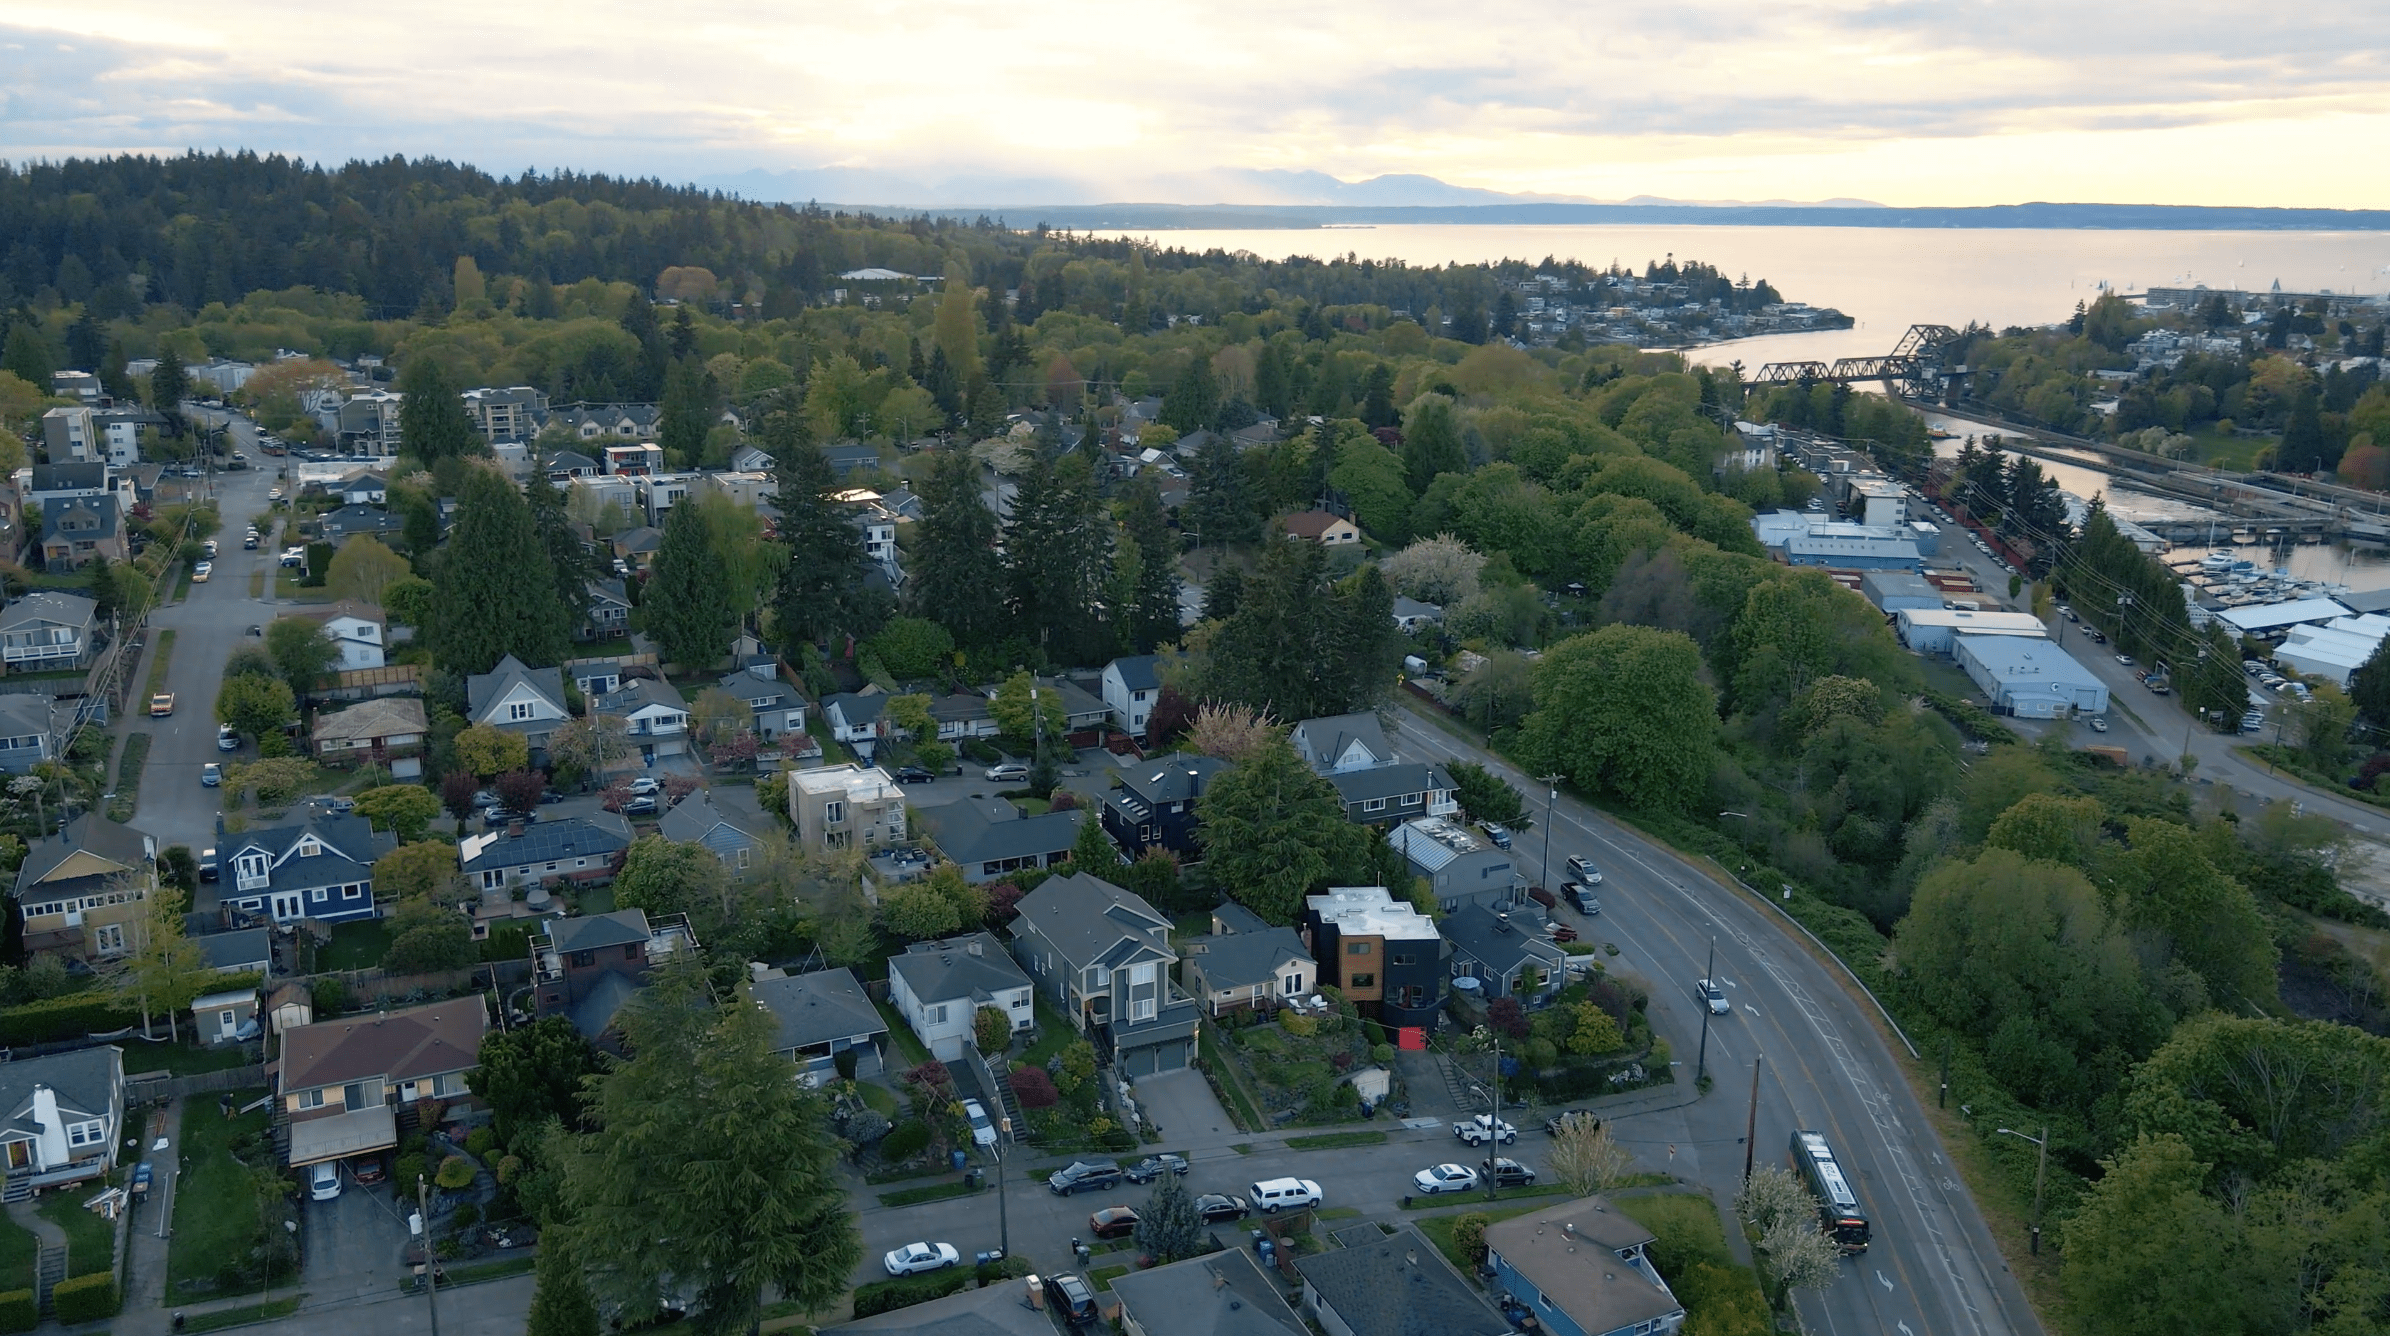 Magnolia Seattle Aerial View